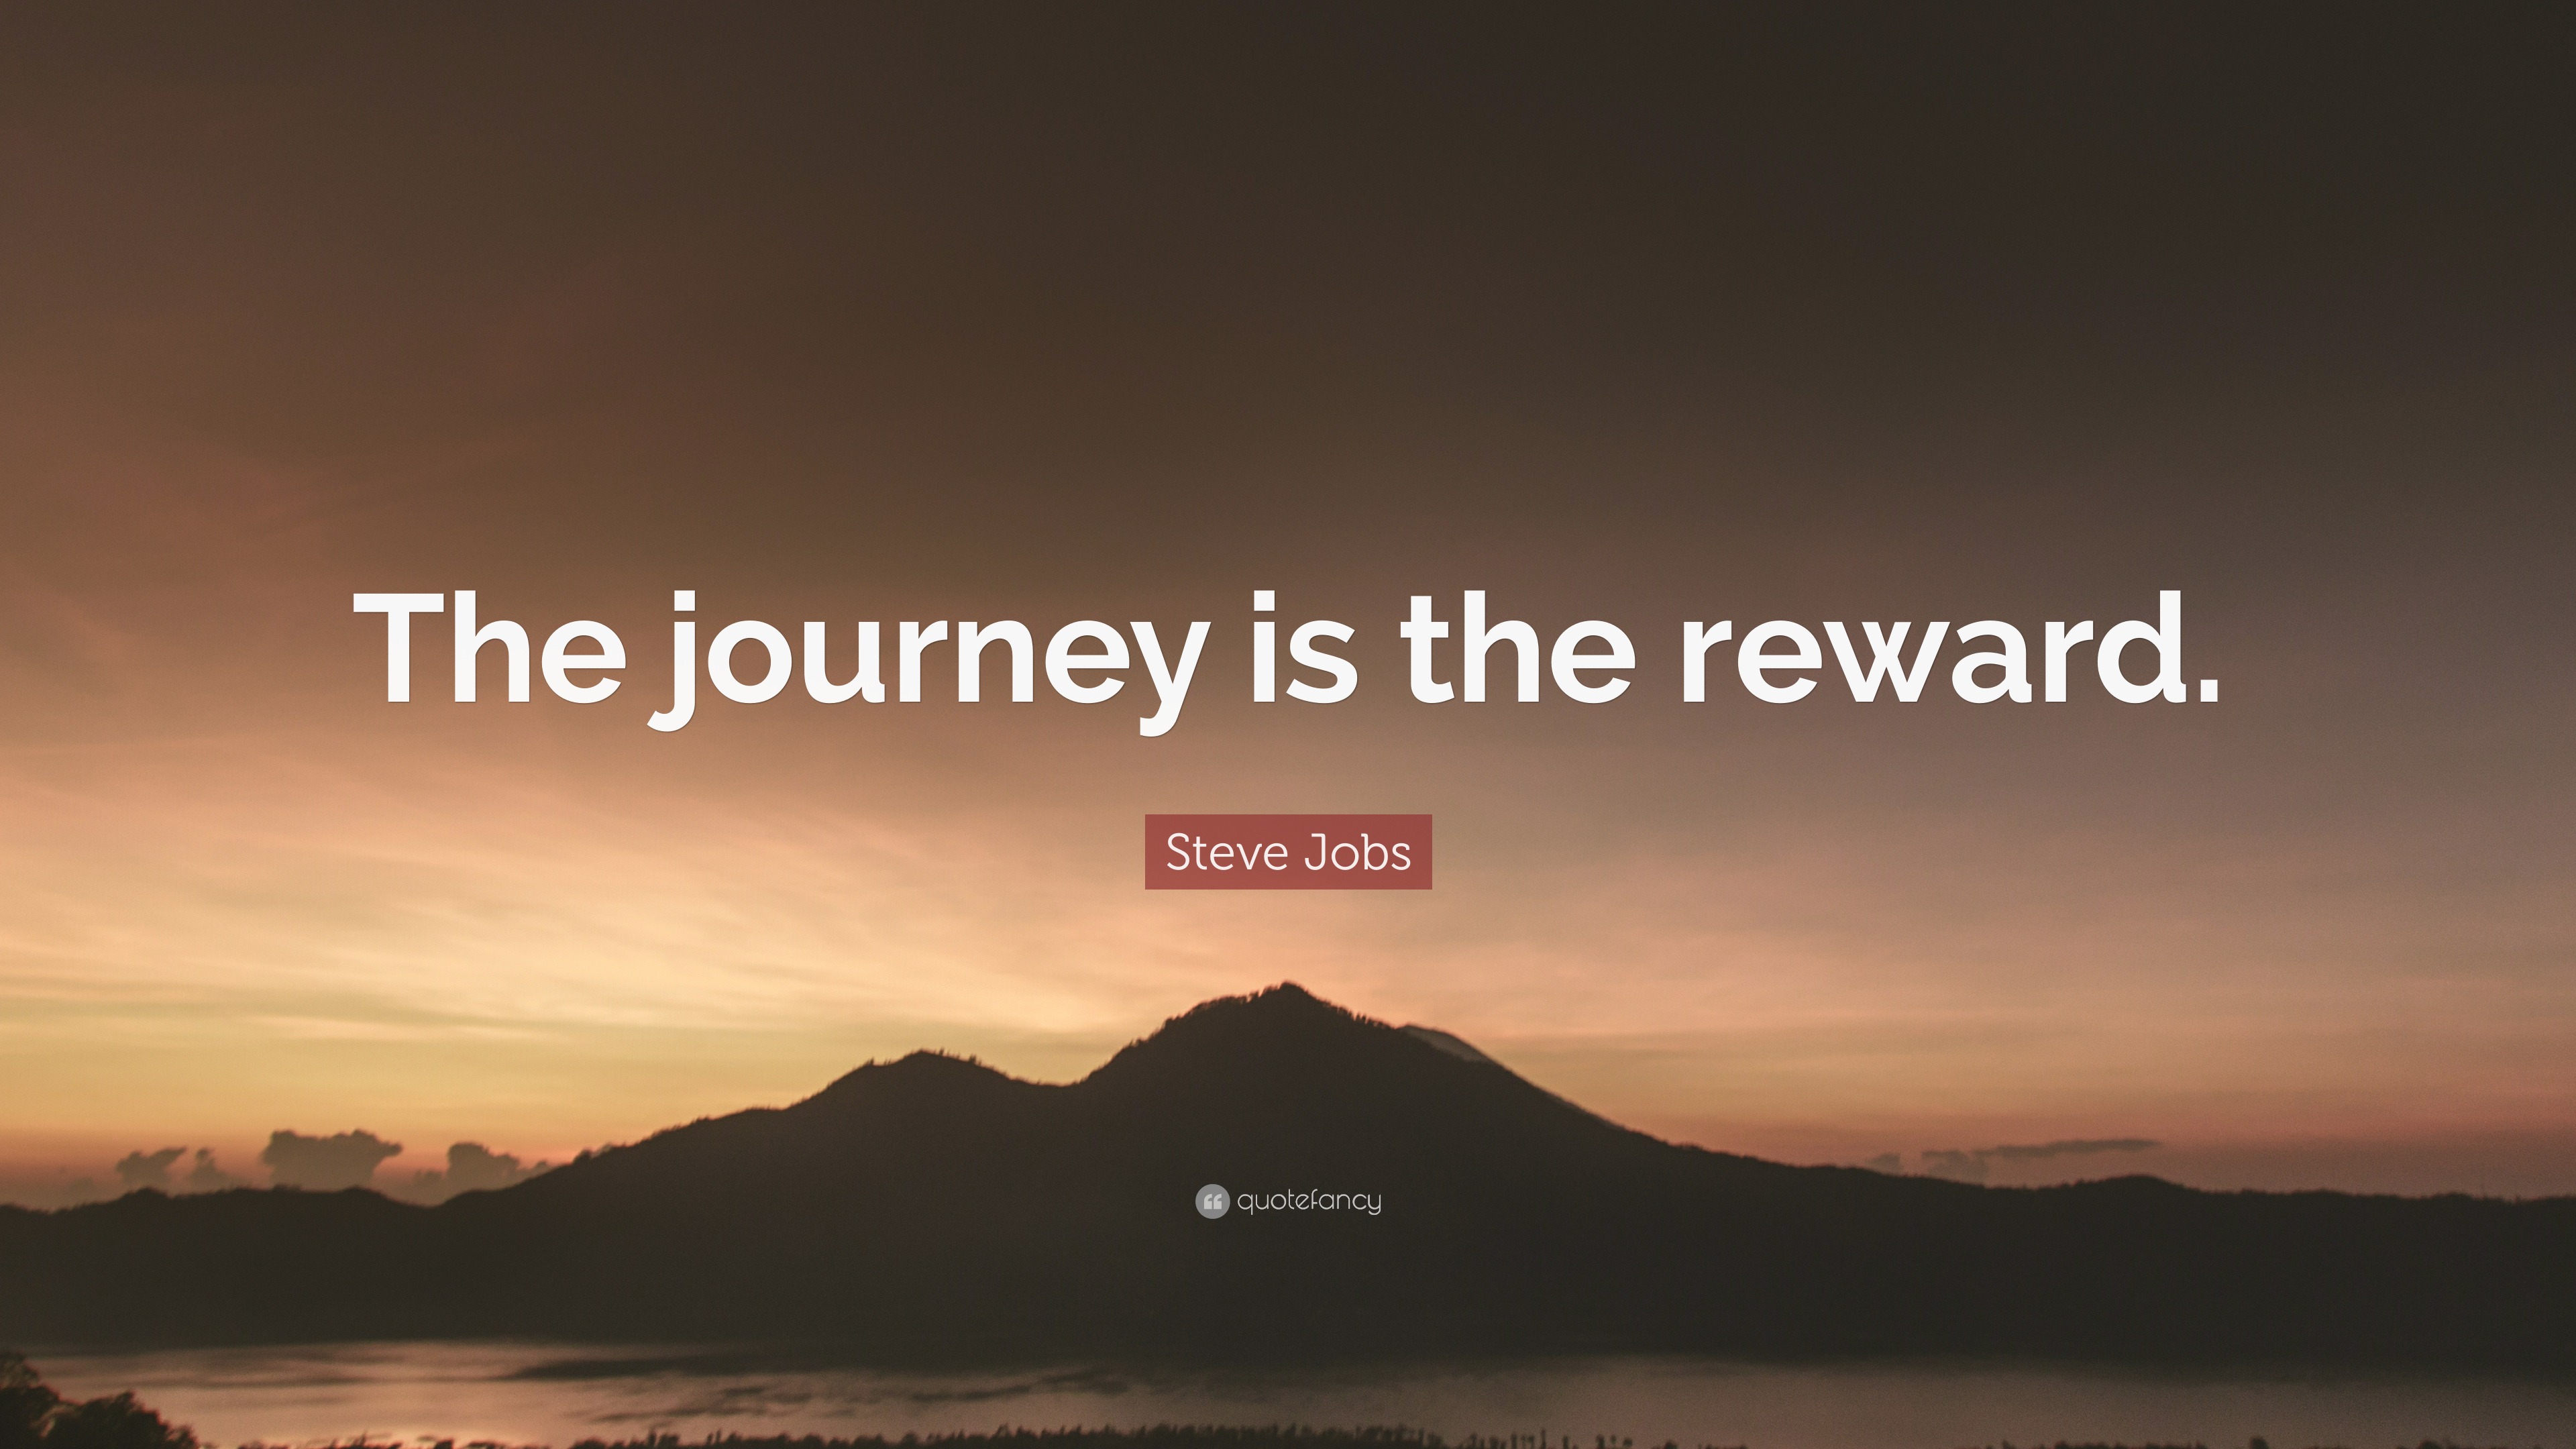 journey is the reward quote